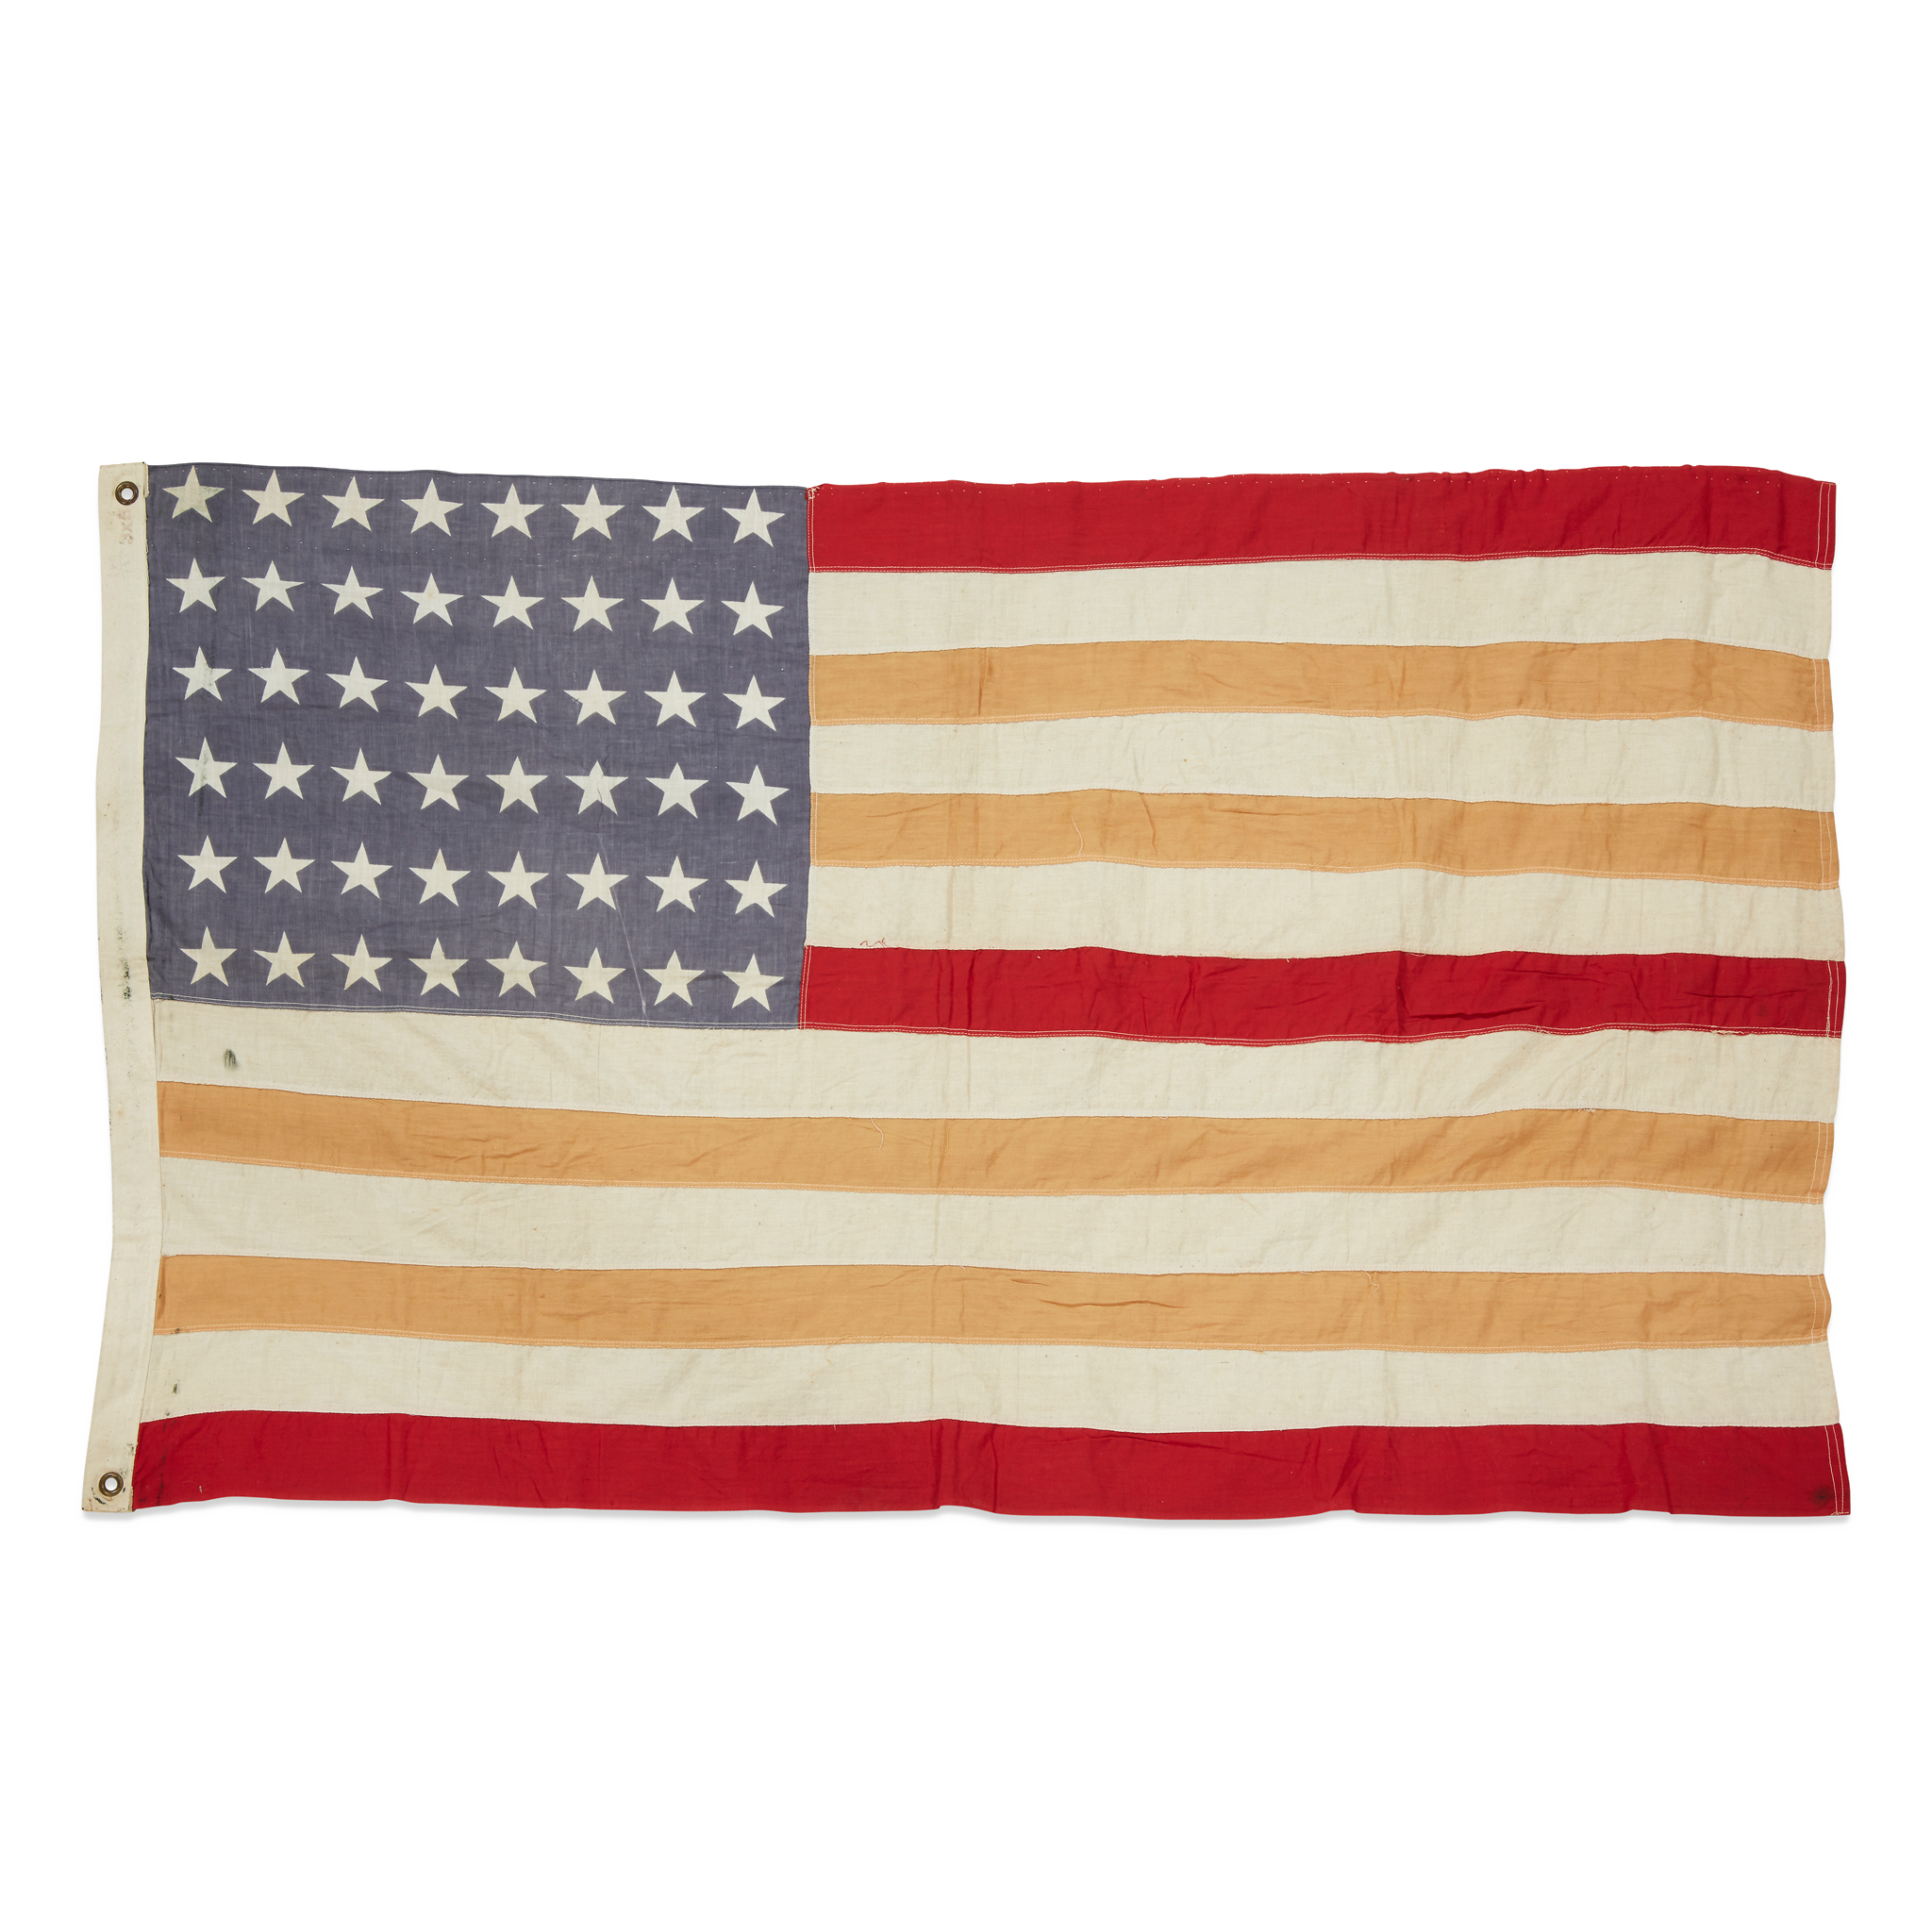 Lot 182 | A 48-Star American Flag, circa 1943, $2,000-3,000